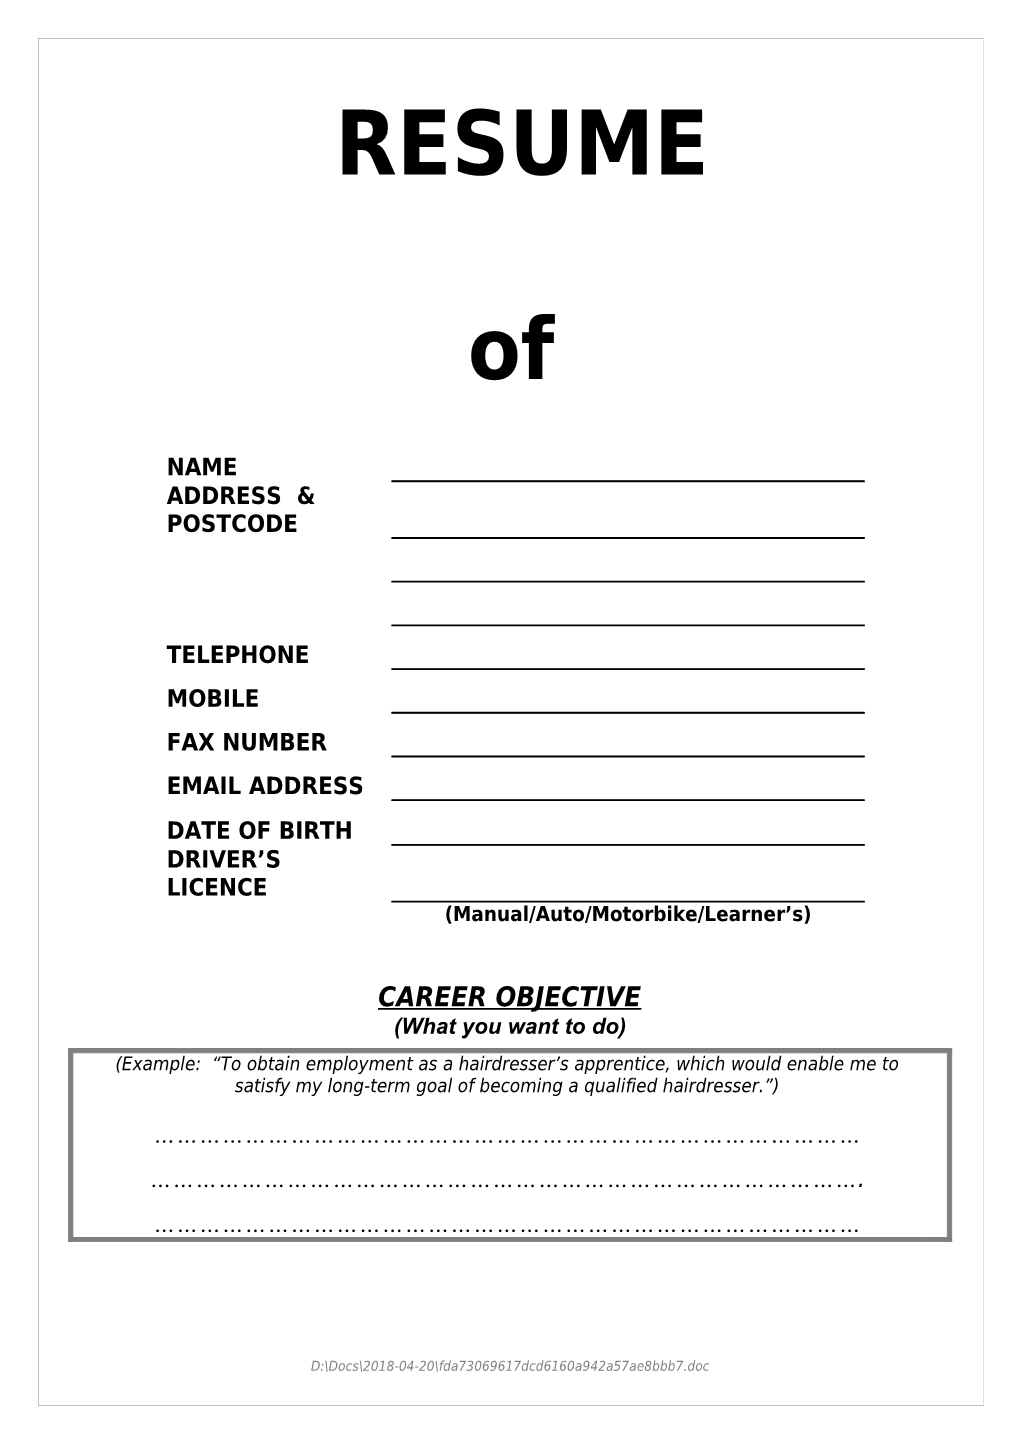 Career Objective s6